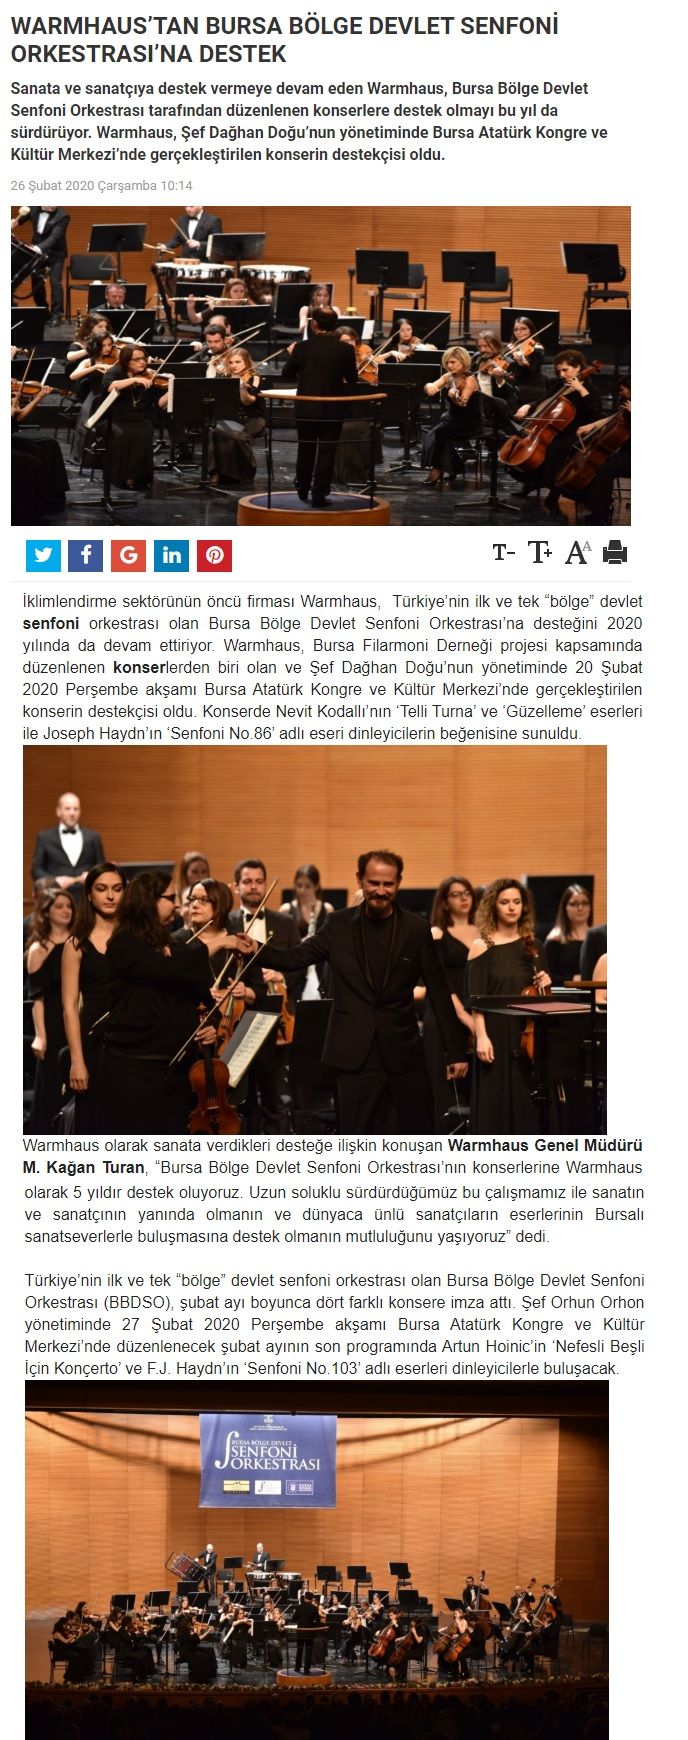 Warmhaus Bursa Bölge Devlet Senfoni Orkestrasına Destek 